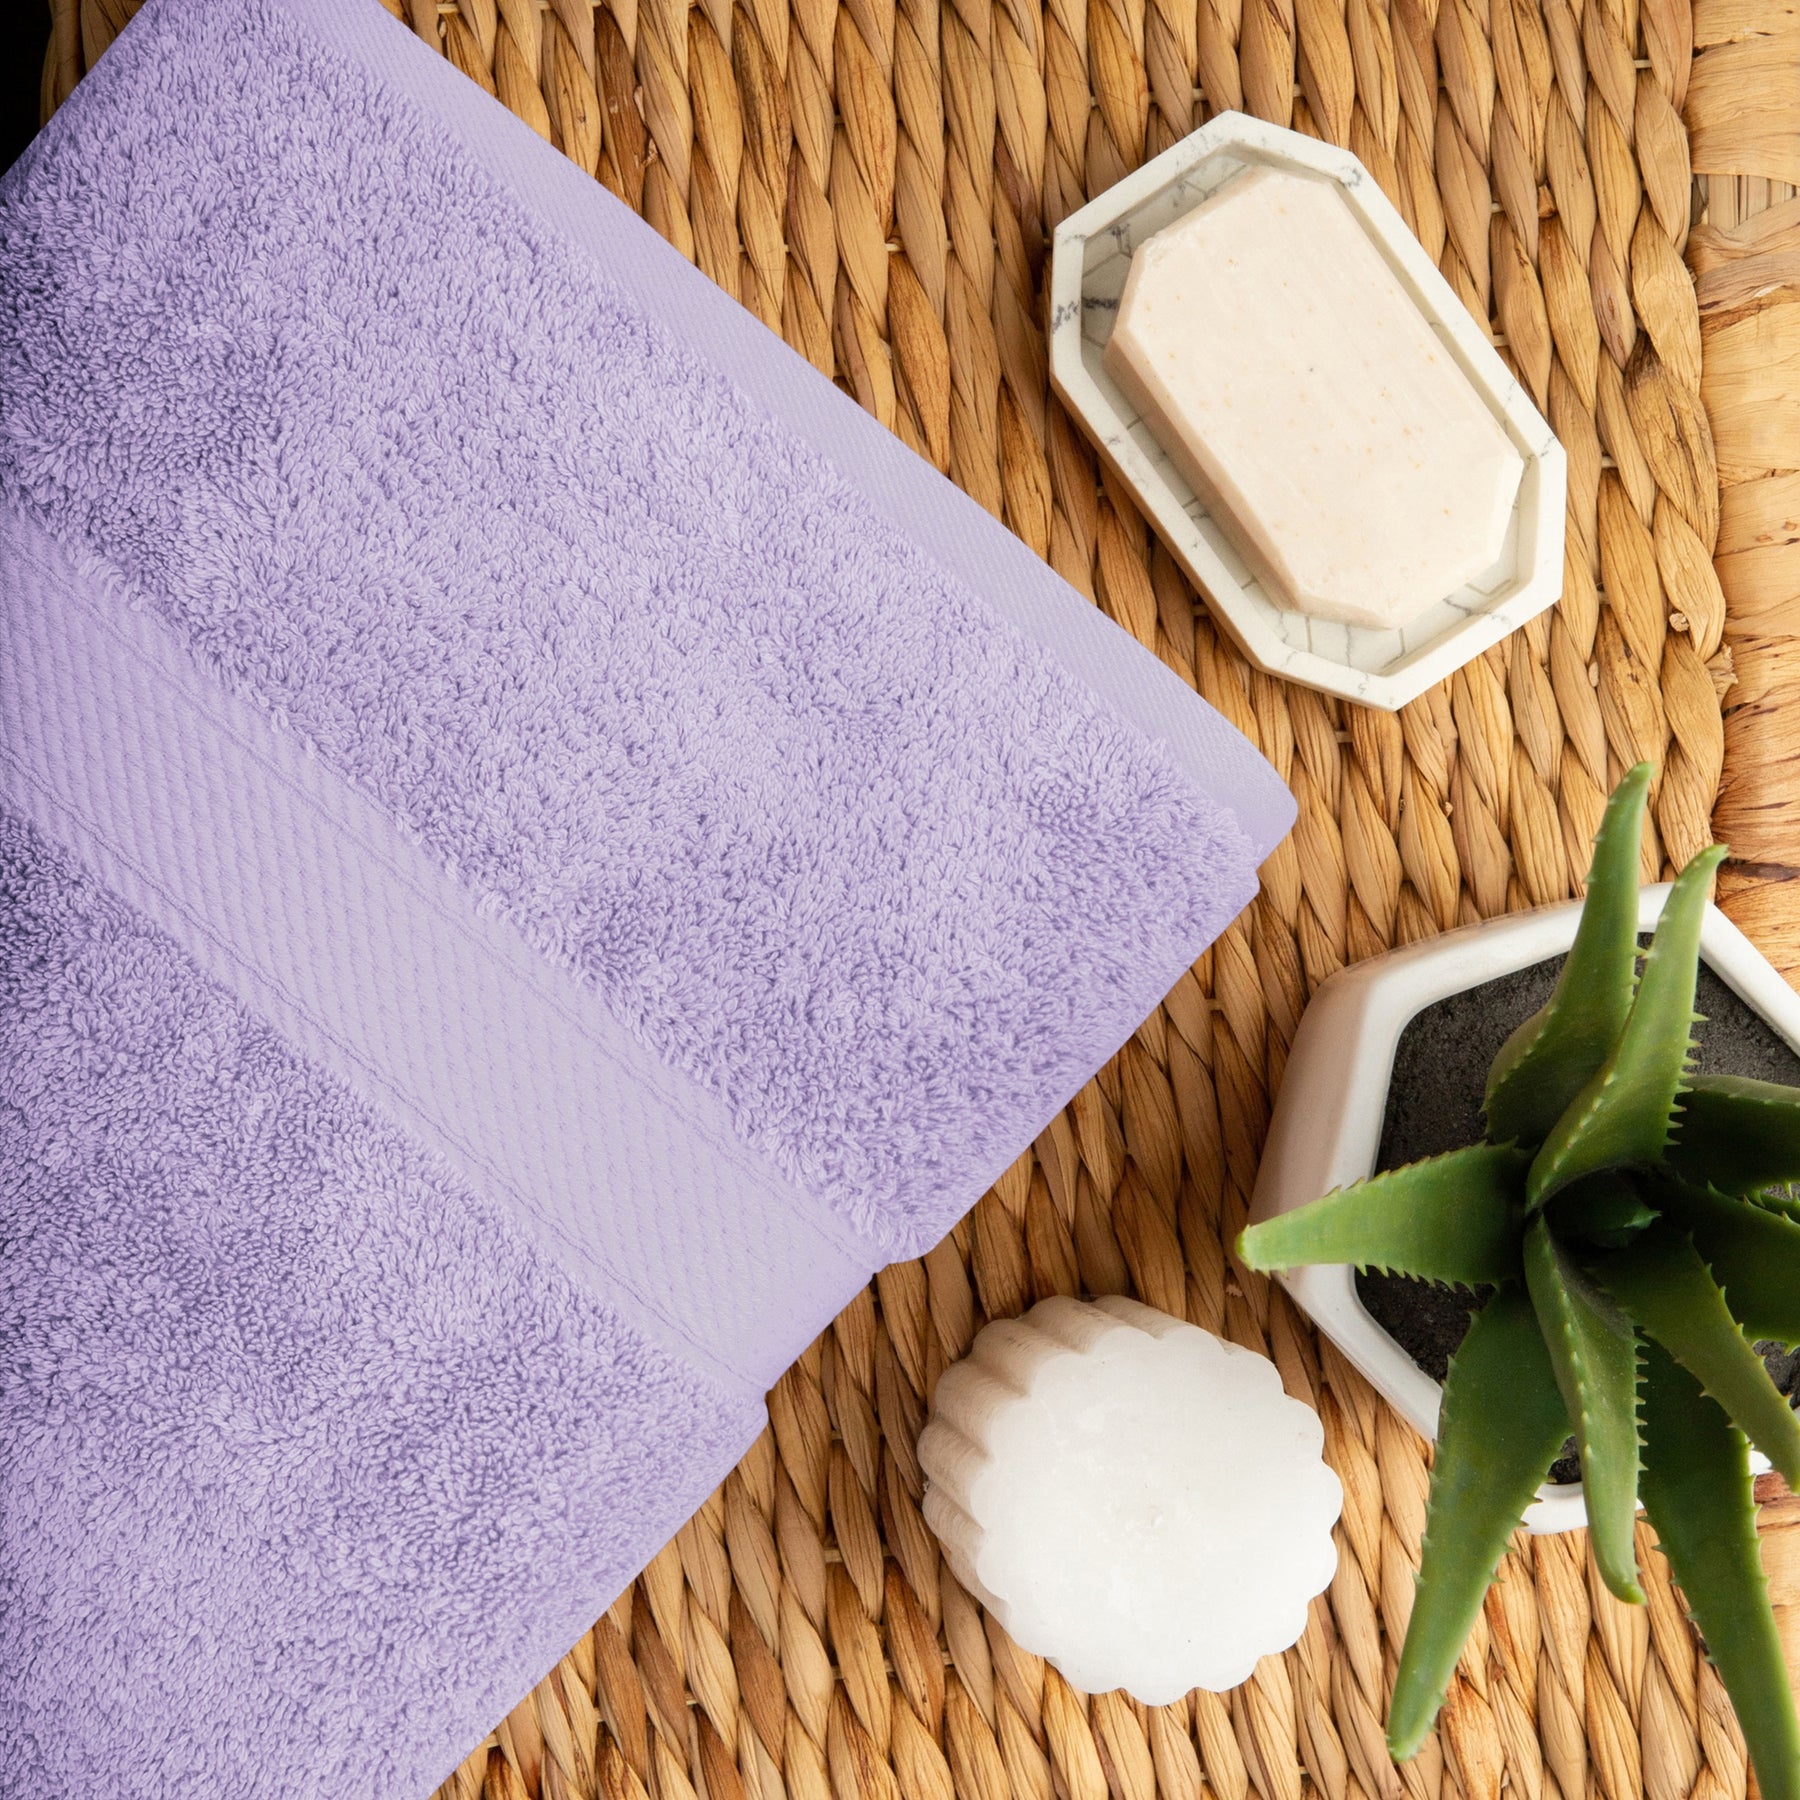 Egyptian Cotton Heavyweight 10 Piece Bath Towel Set - Purple